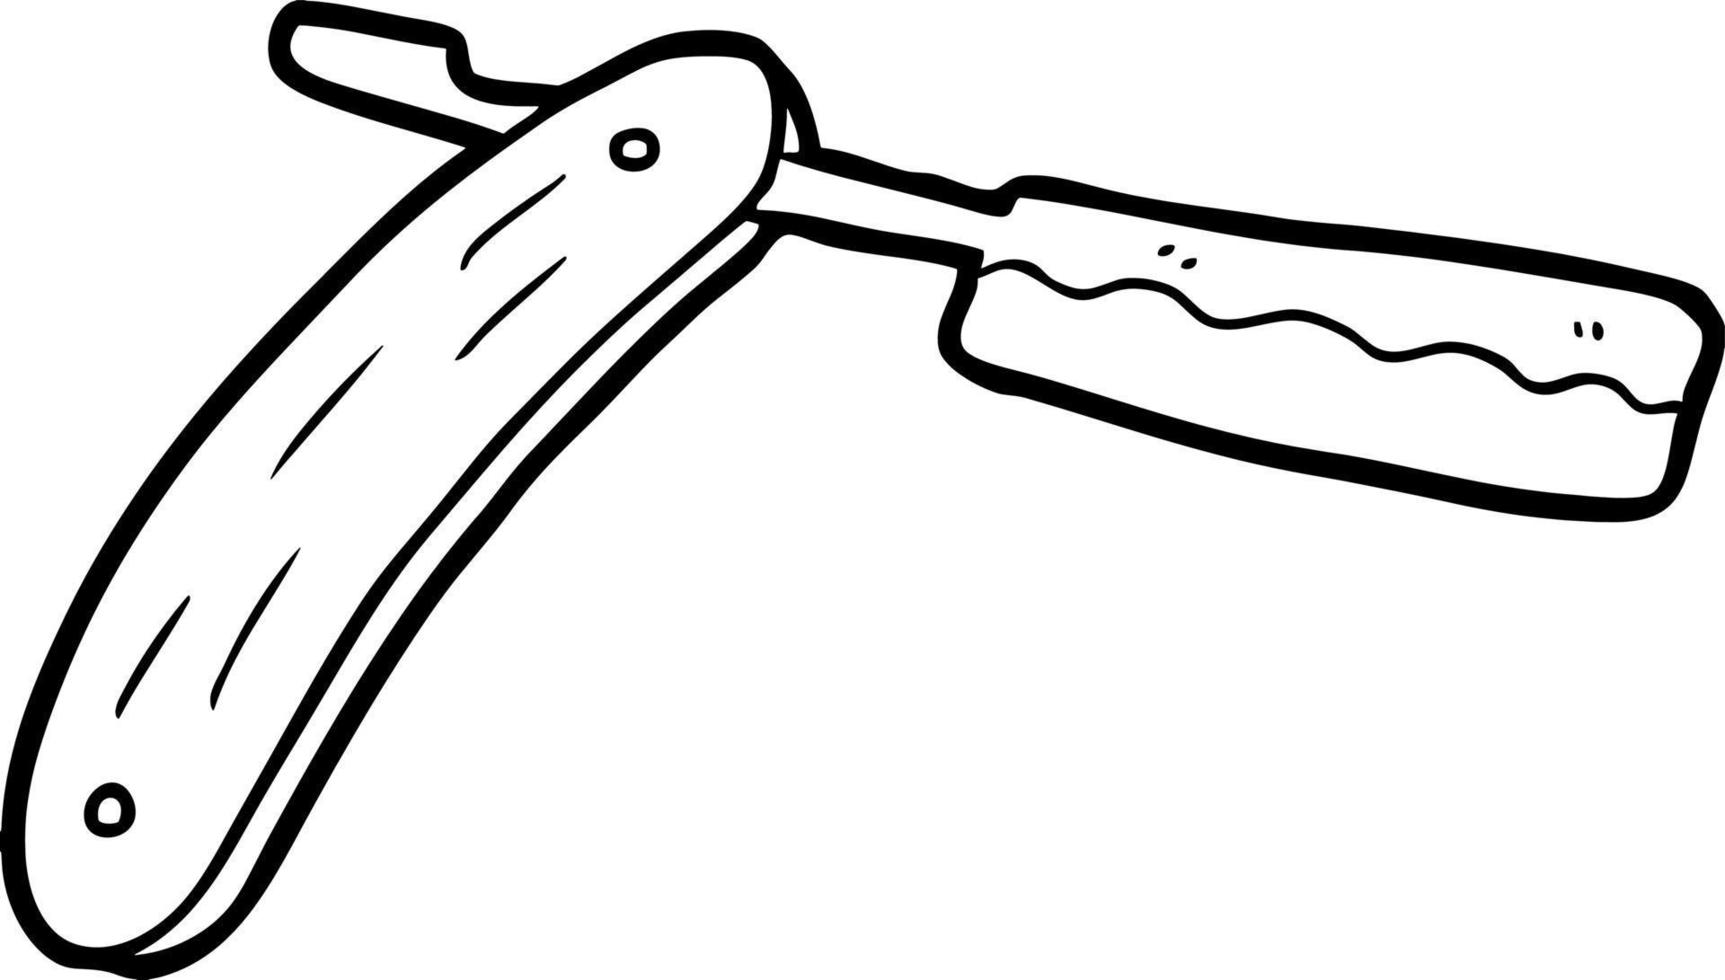 desenho de navalha de garganta cortada vetor